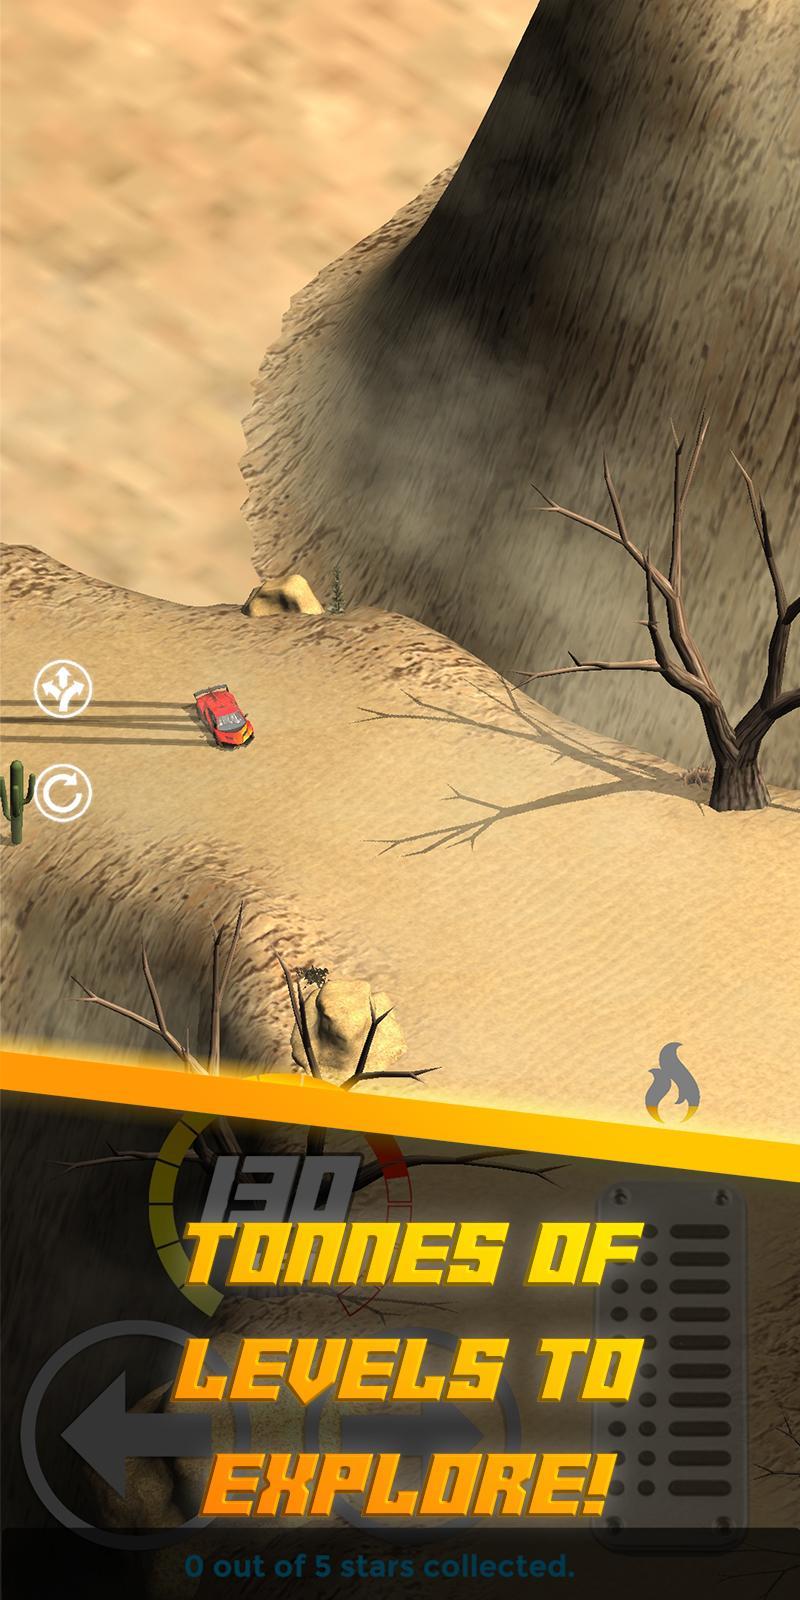 Drift Worlds ⚠️ Real Life Drifting, Arcade Racing 3.3 Screenshot 4